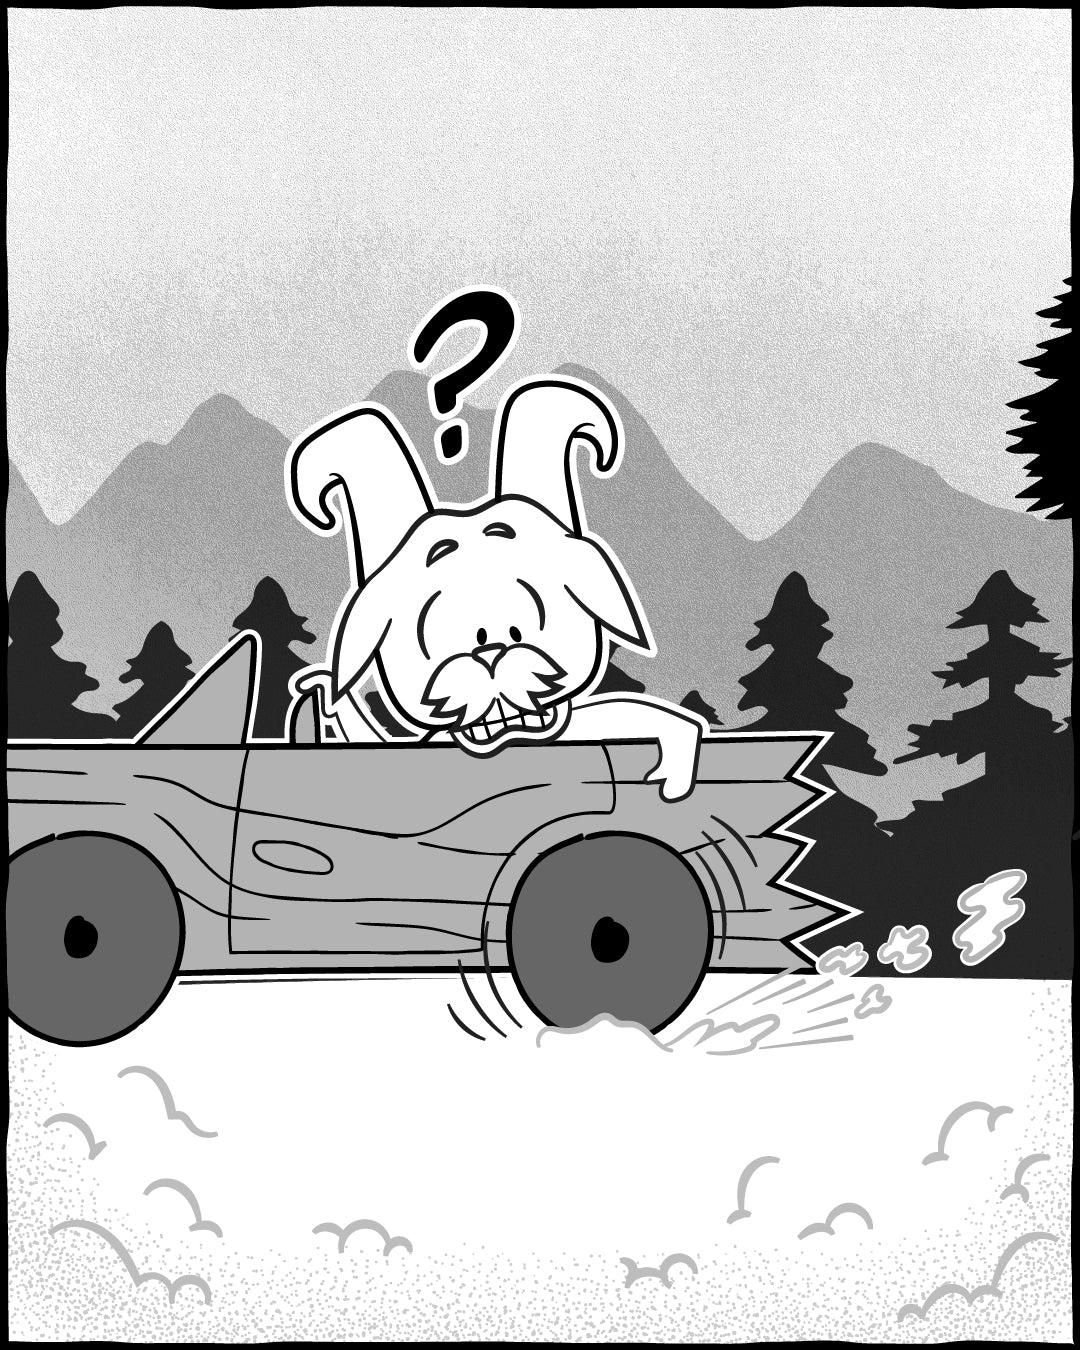 Car Stuck - No Chains, Snow Problem, The Adventures Of Lambert Comic Series | TRVRS Outdoors